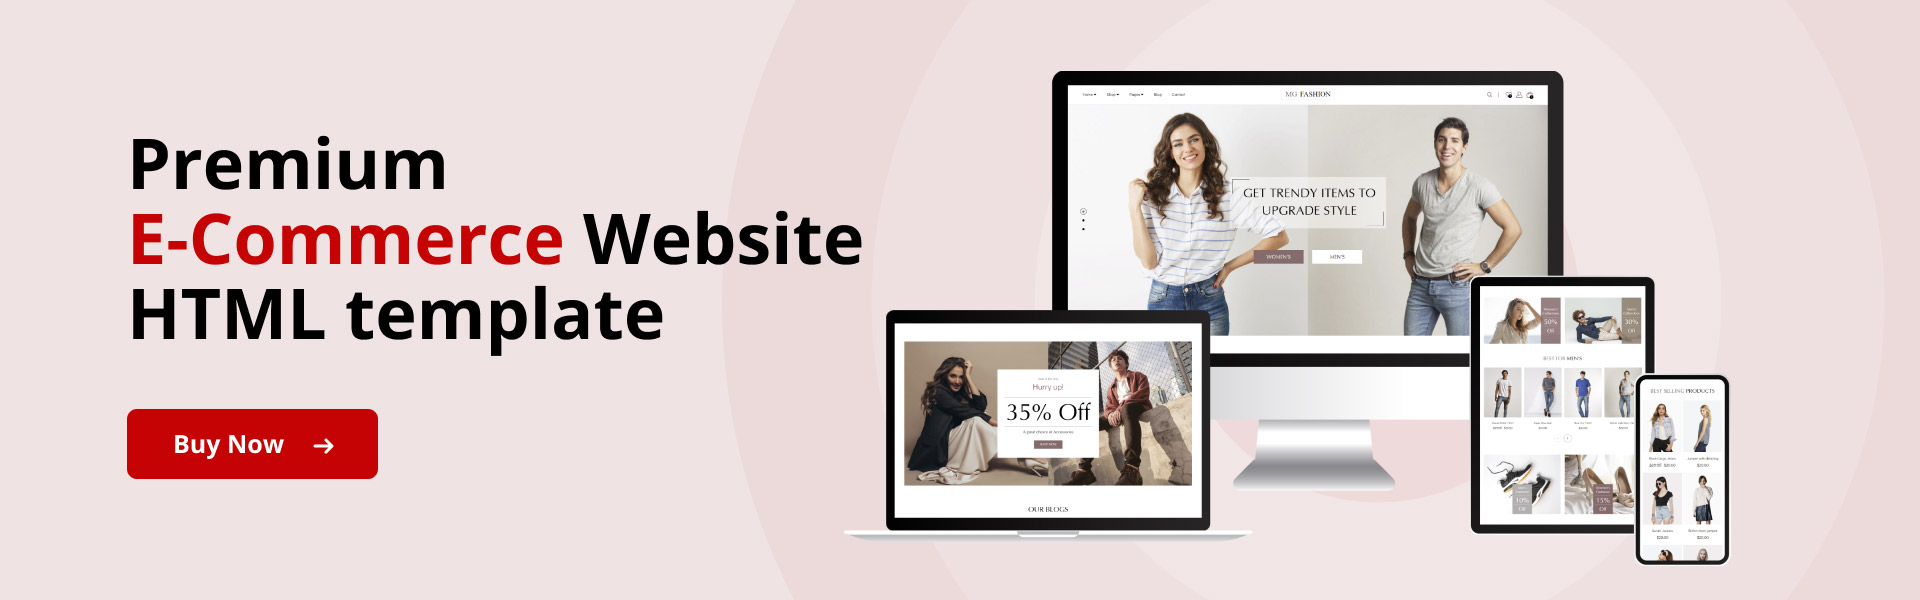 Premium E-Commerce Website HTML Template